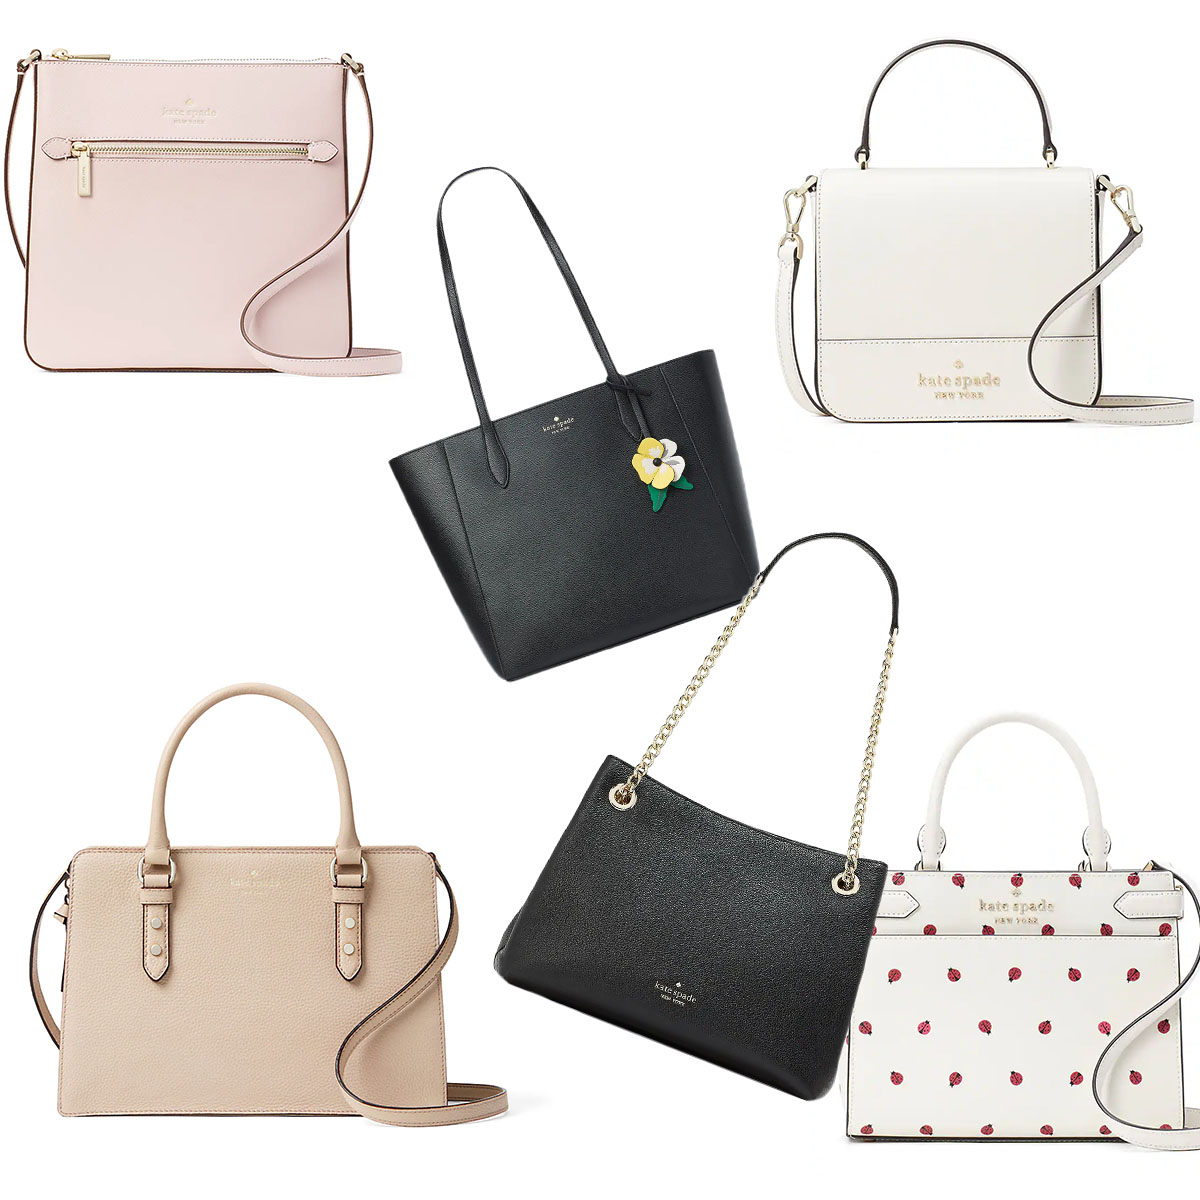 Kate Spade Purse Handbag Brown Color  Trendy purses, Bags, Kate spade  handbags